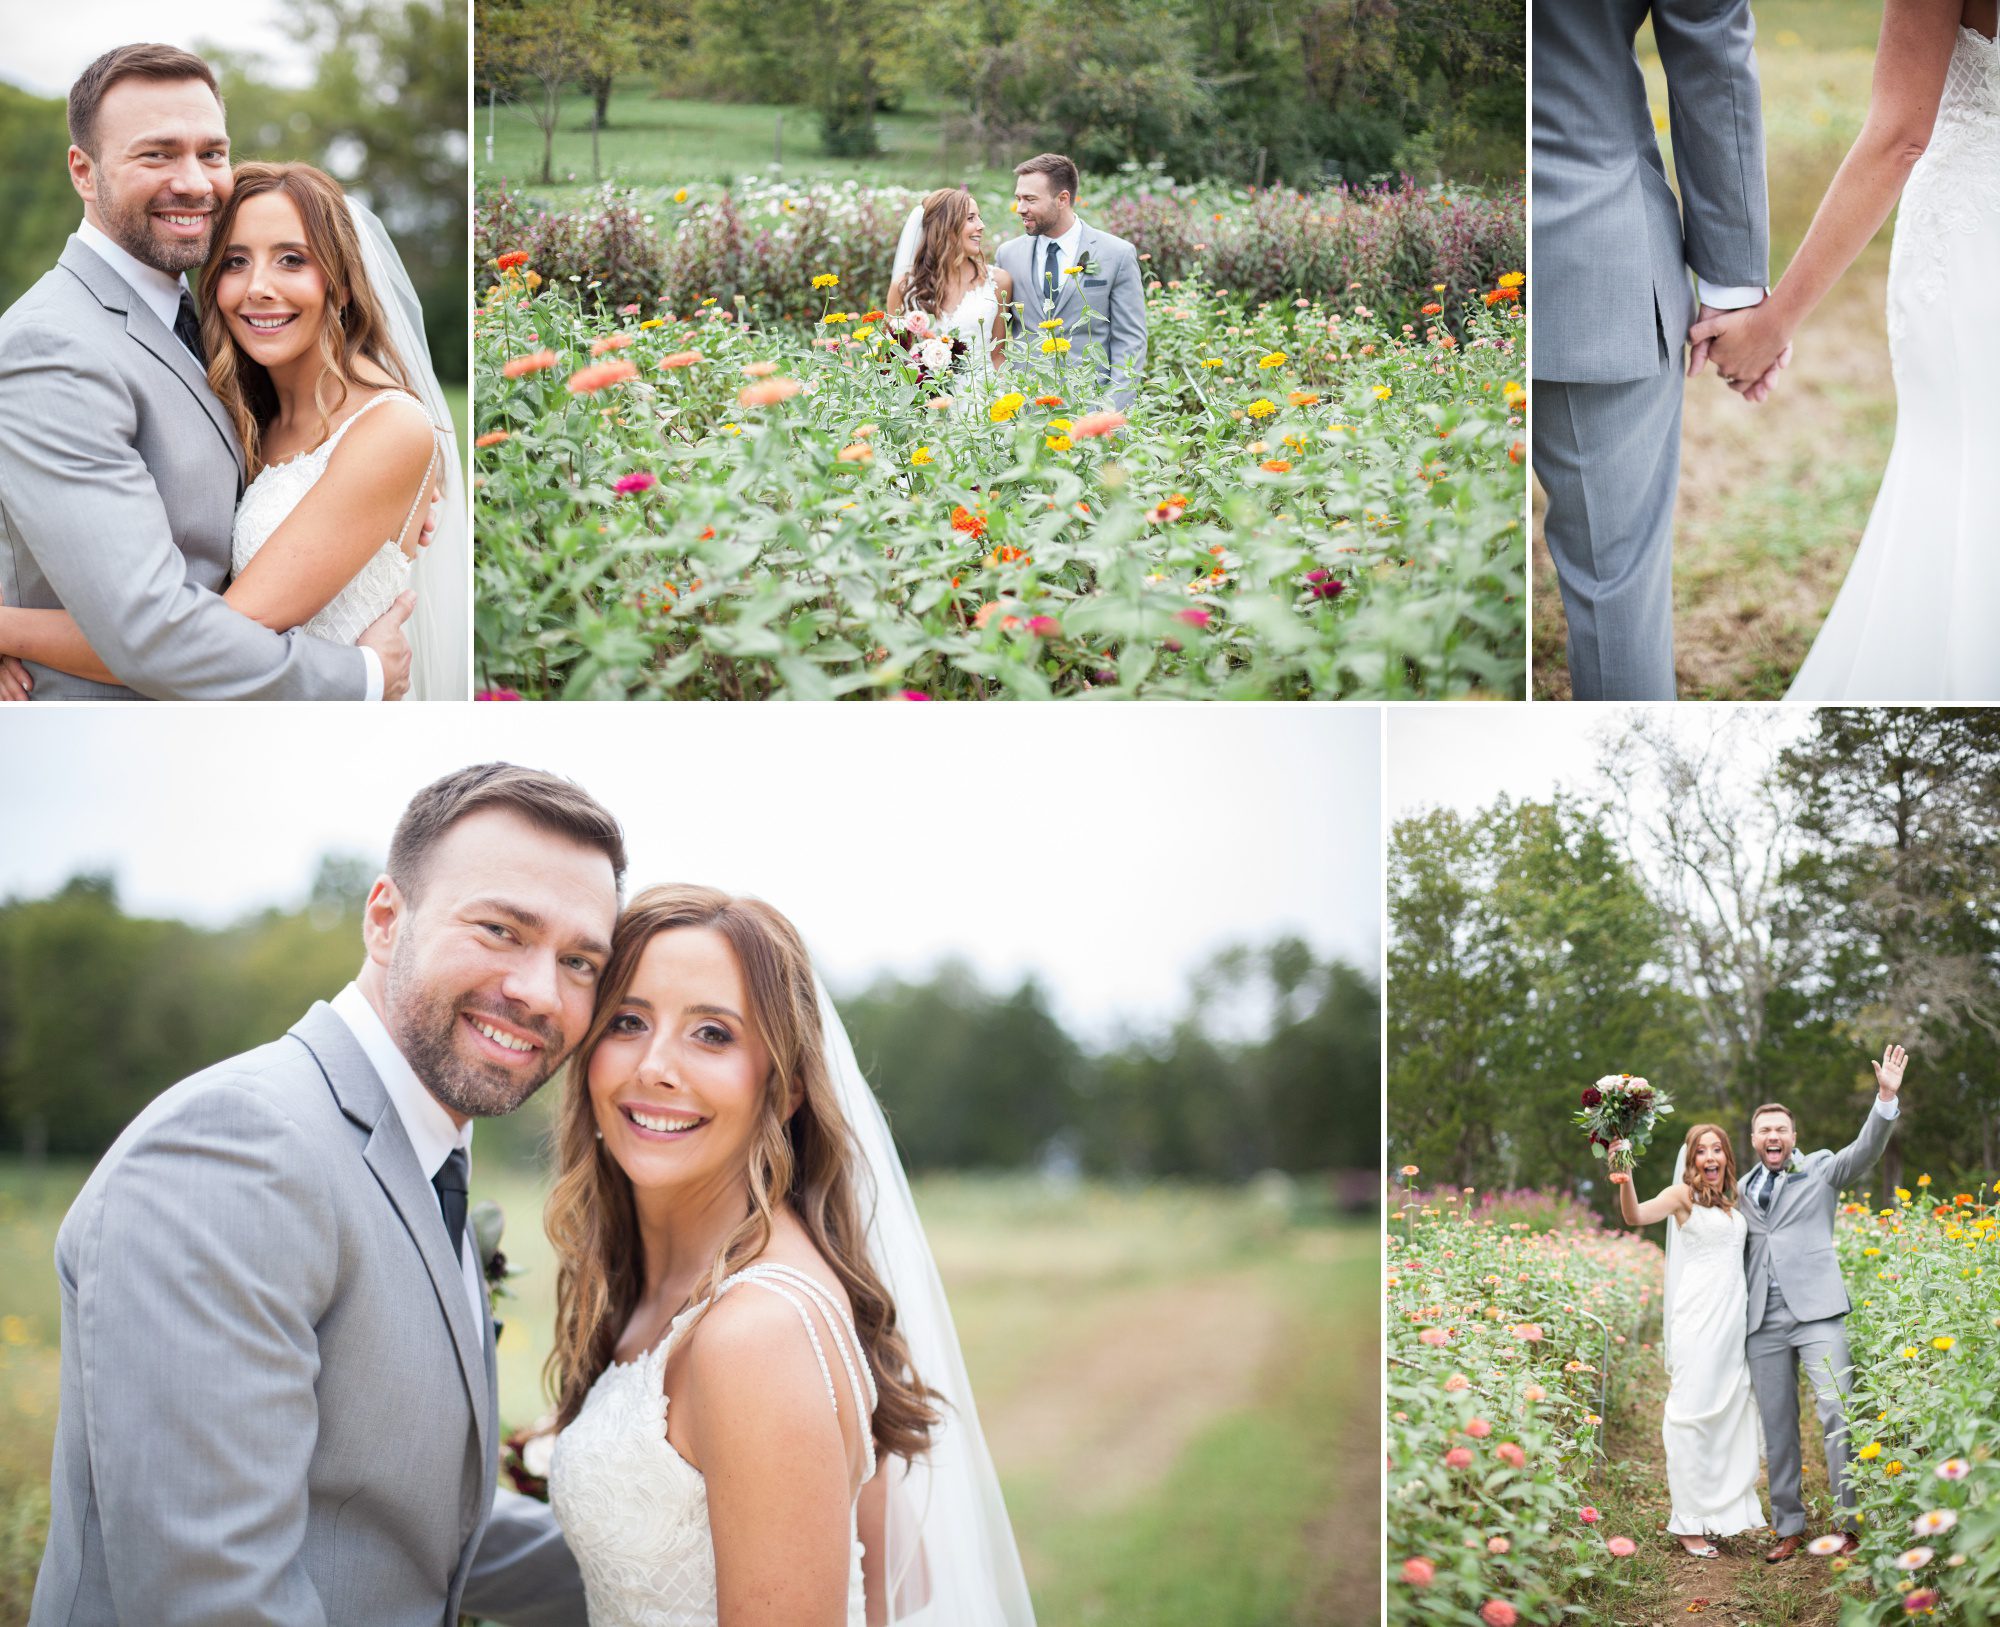 Bride and groom pose for photos in flowers after wedding ceremony at Green Door Gourmet wedding in Nashville, TN